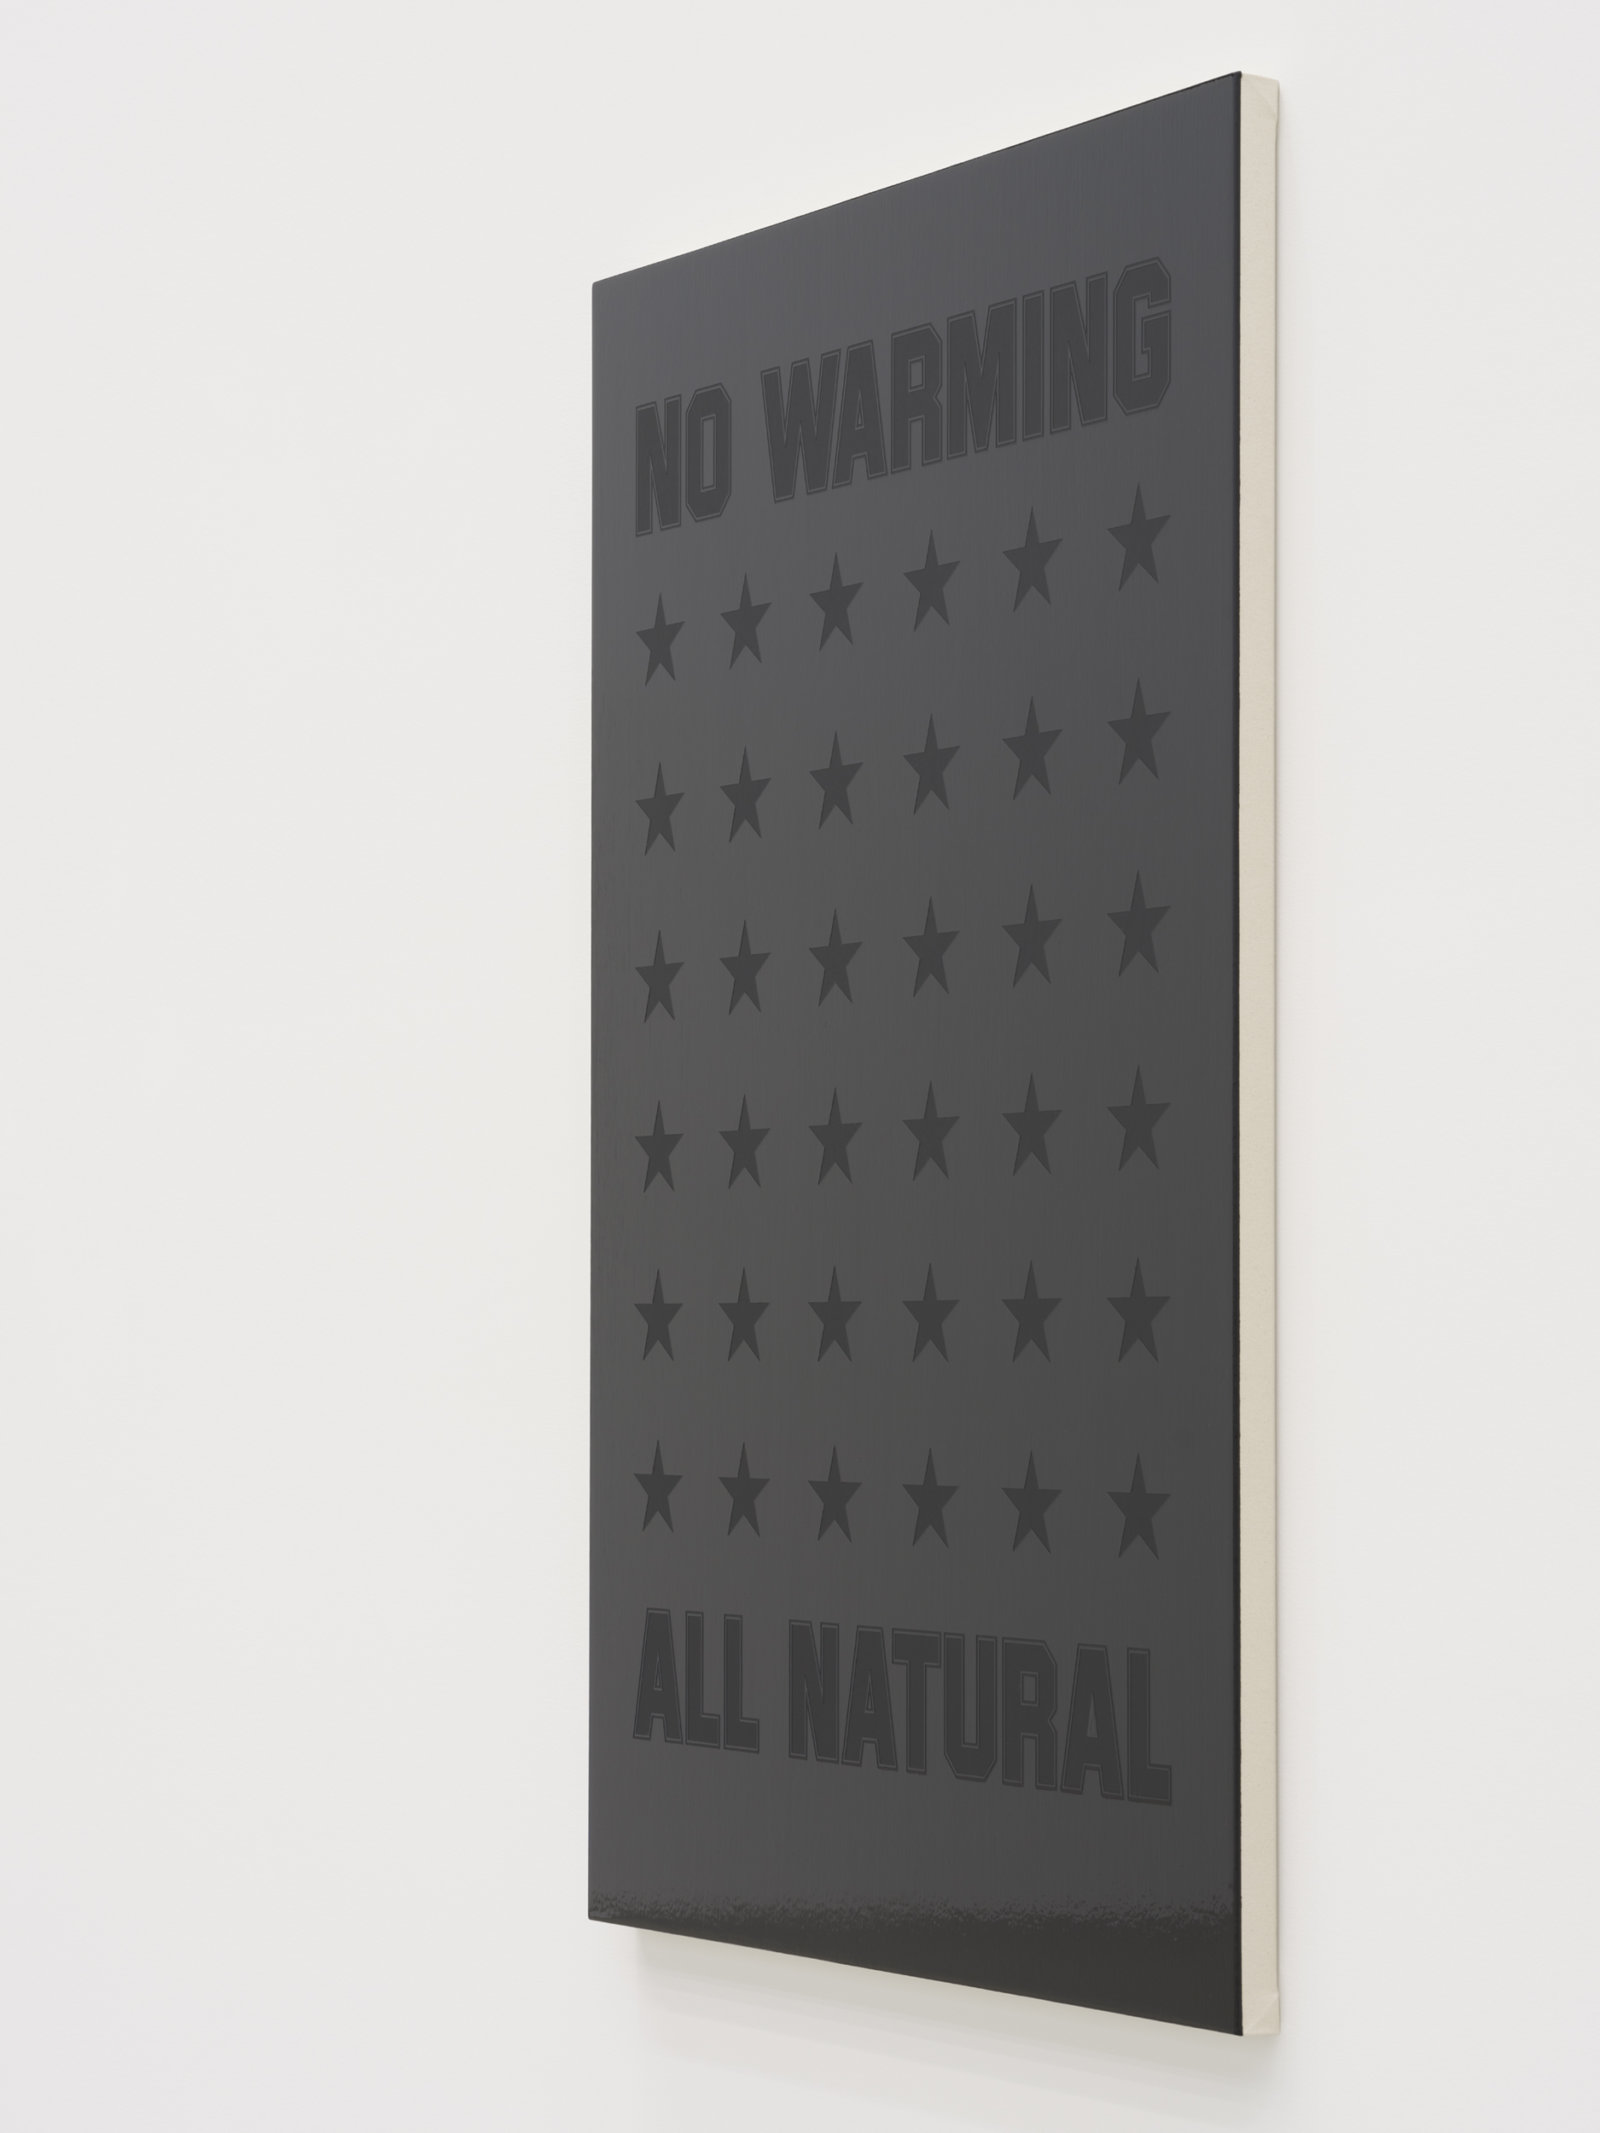 Ron Terada, No Warming All Natural, 2023, acrylic on canvas, 66 x 44 in. (168 x 112 cm)